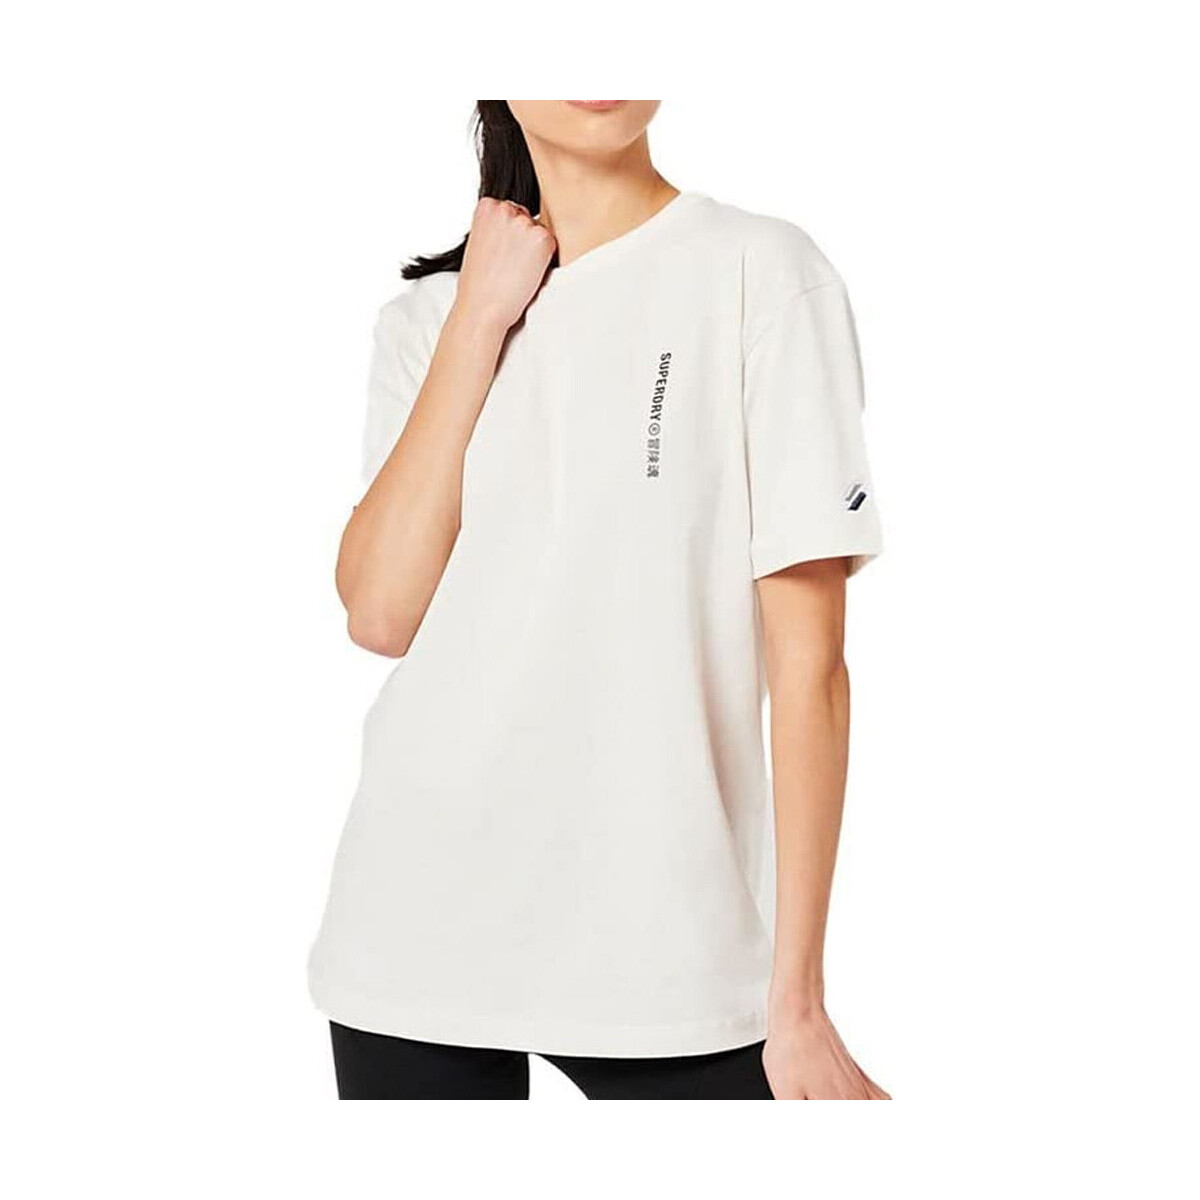 Vêtements Femme Nike NBA Brooklyn Nets Logo Dri-FIT Mens T-Shirt Superdry W1010830A Blanc